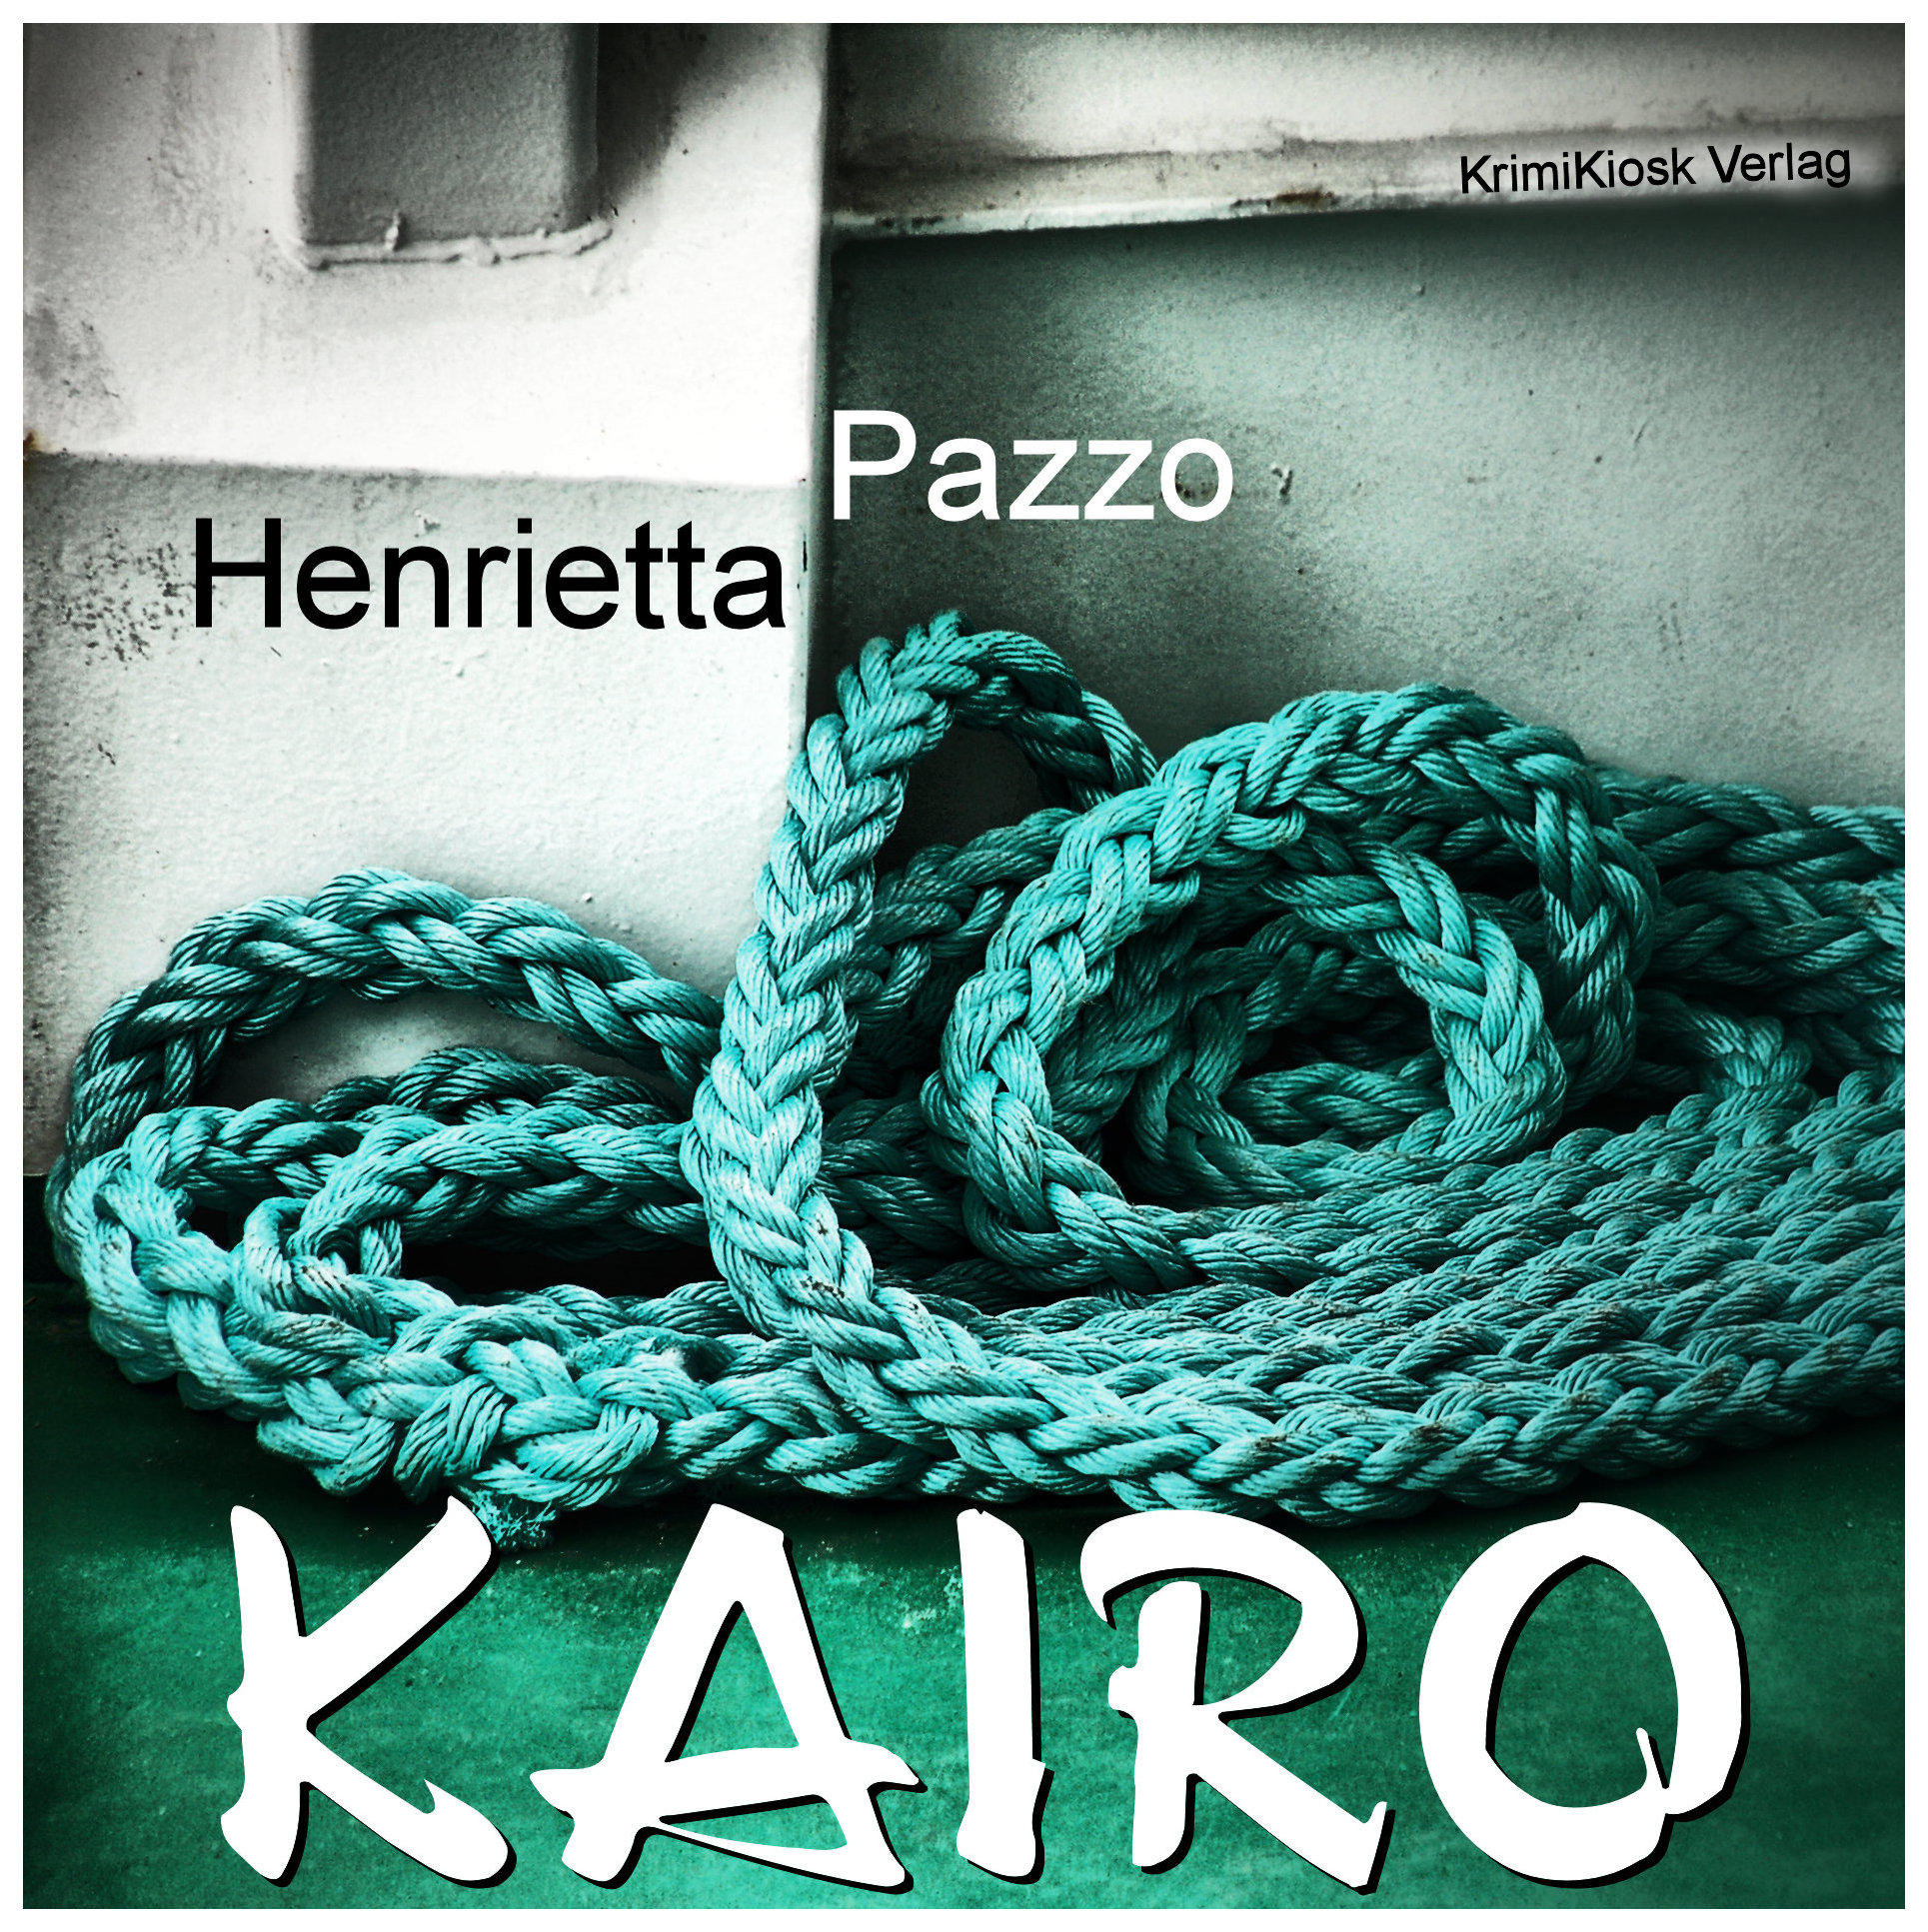 KAIRO  Episode 05 Kriminalroman von Henrietta Pazzo